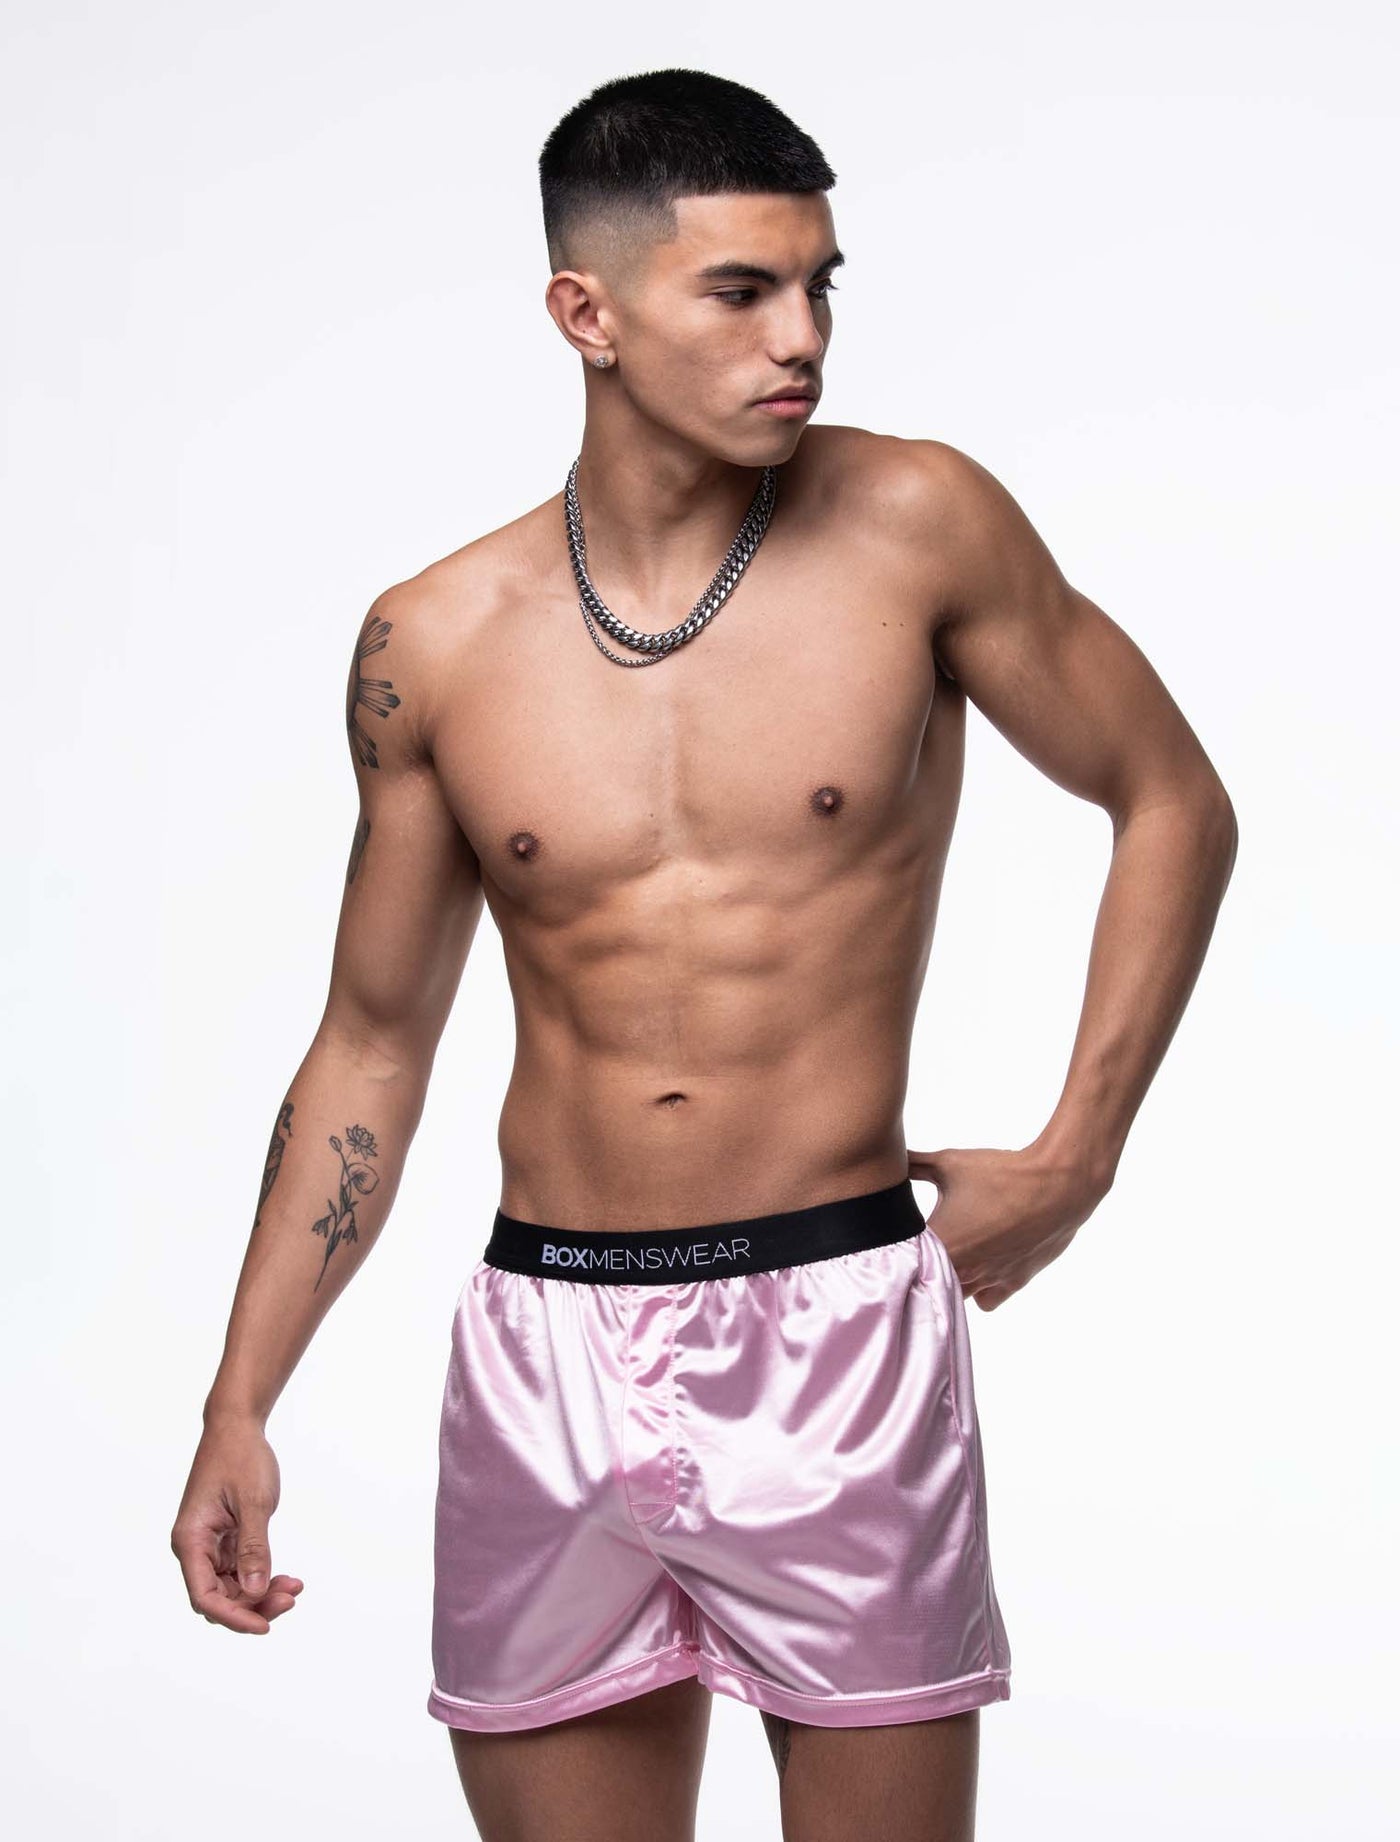 Silk Decline Boxer Shorts - Lavish Pink